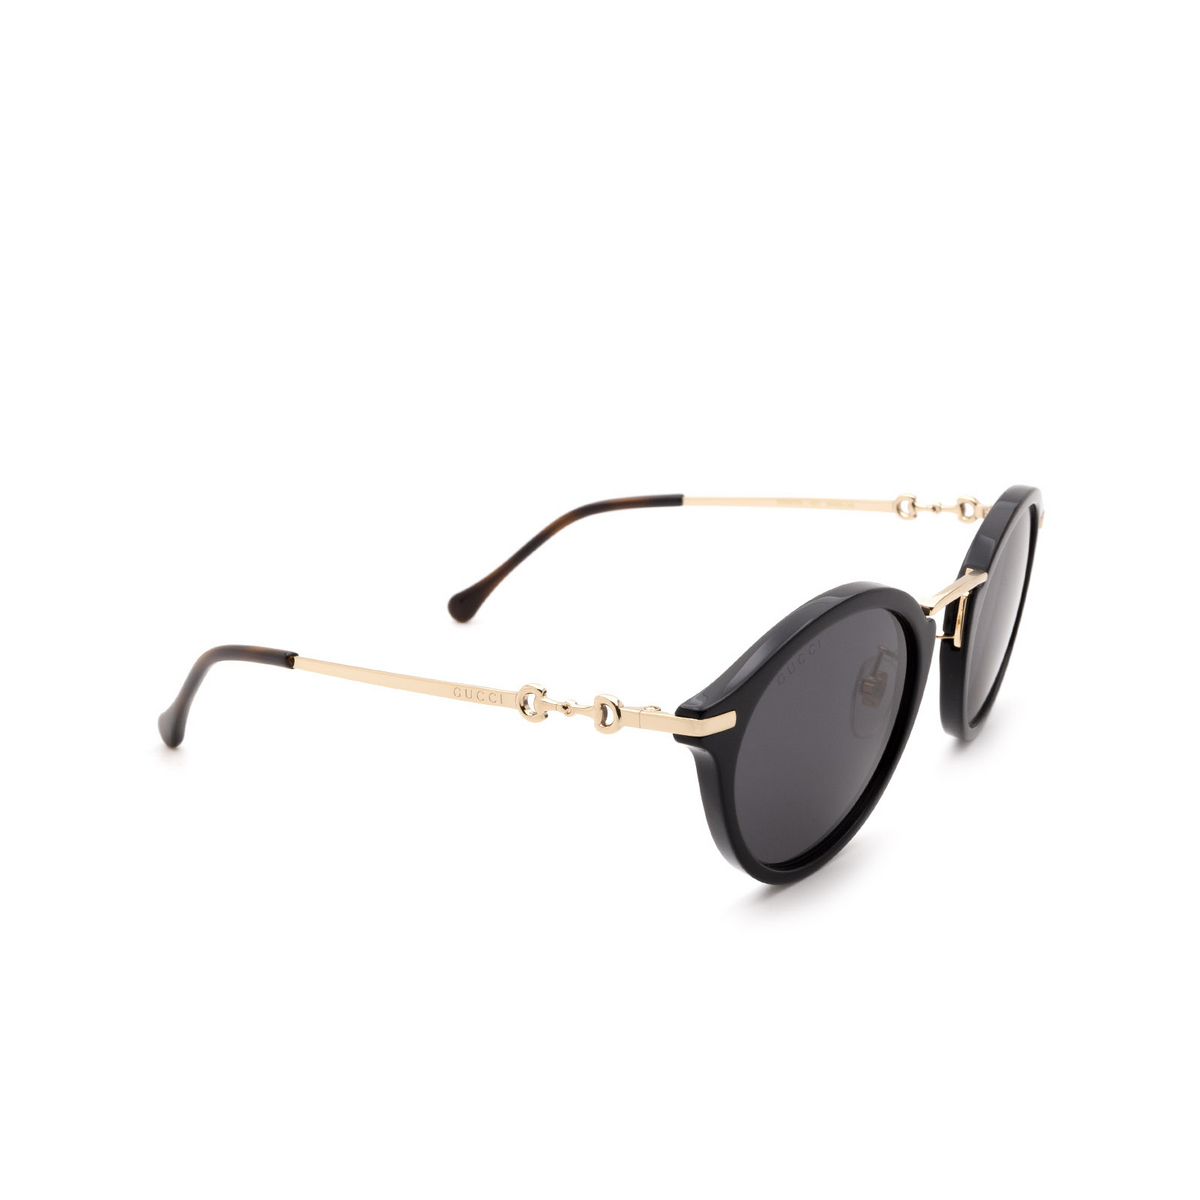 Gucci® Sunglasses: GG0917S color Black 001 - front view.